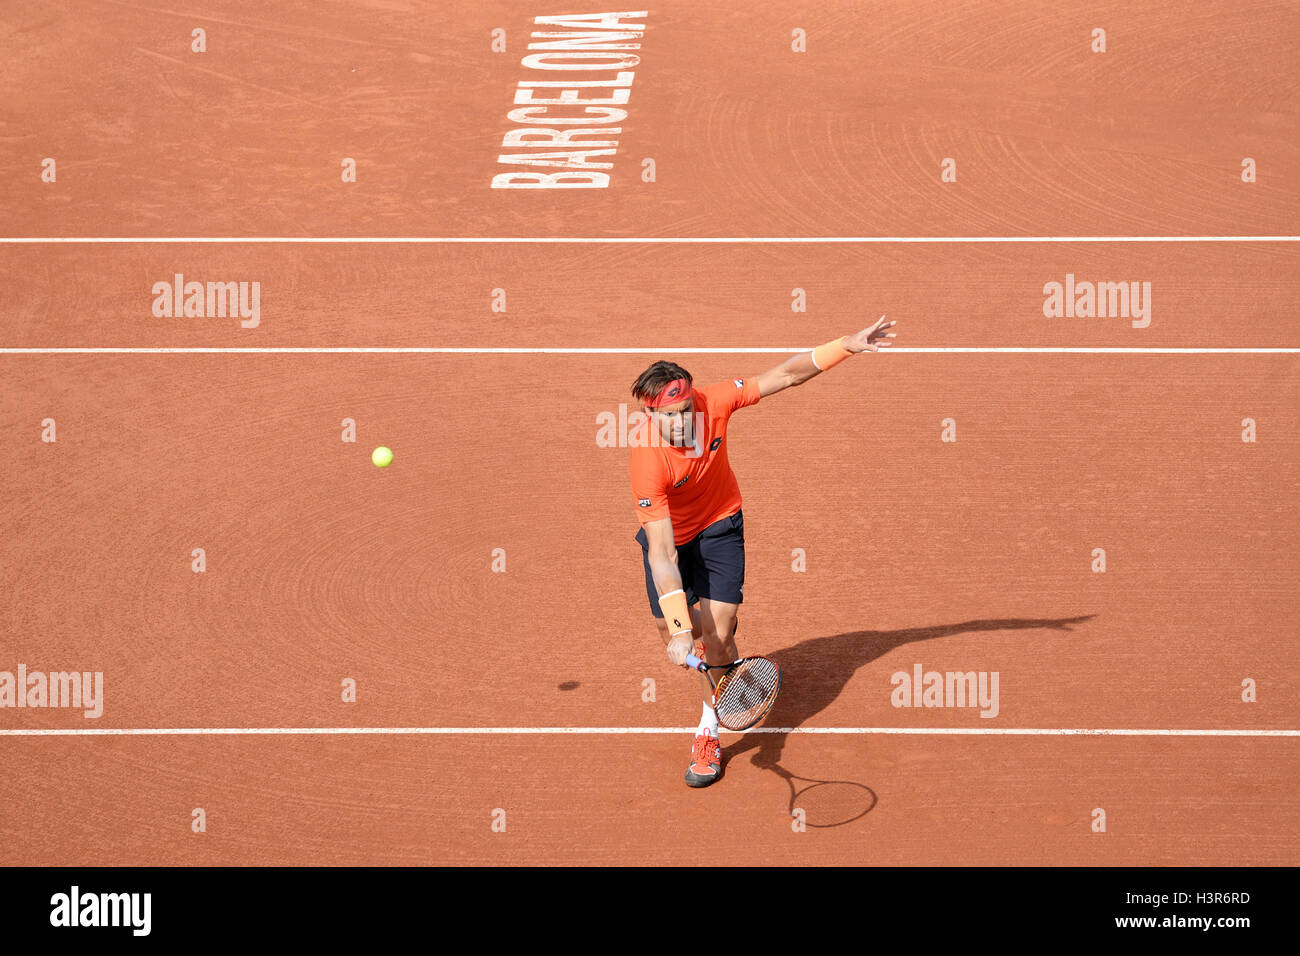 BARCELONA - 24 APR: David Ferrer (spanischer Tennisspieler) spielt bei den ATP Barcelona Open. Stockfoto